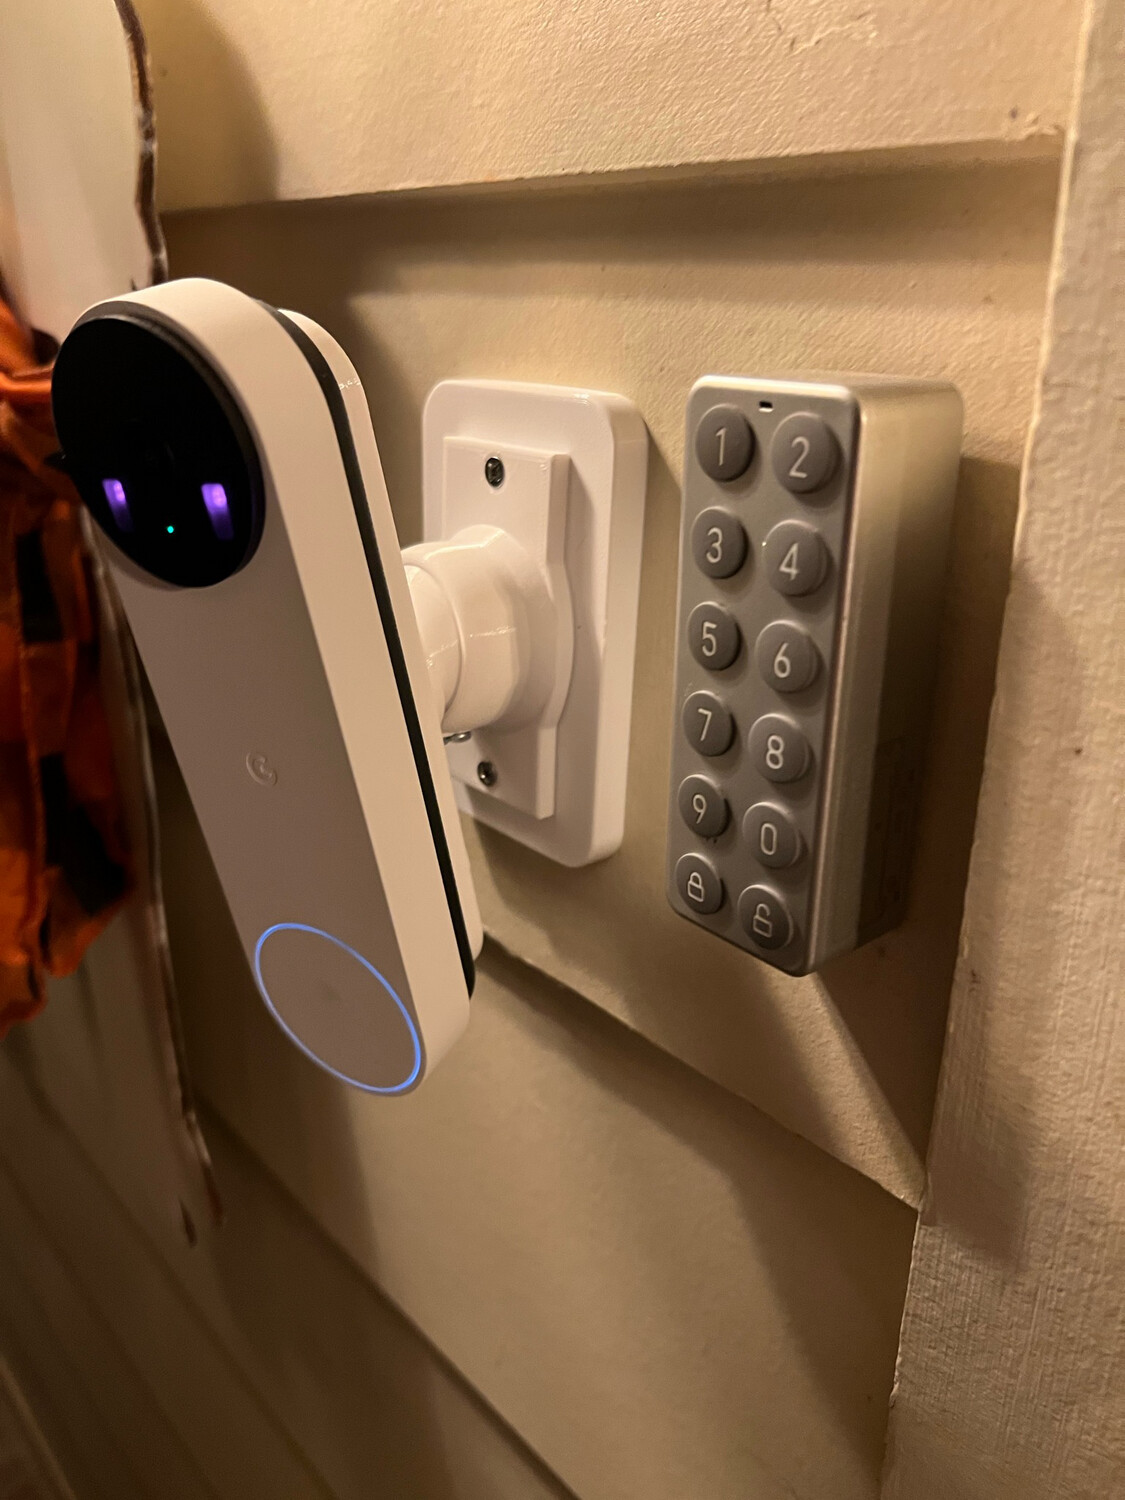 Google Wired Generation 2 Doorbell 35 Degree Swivel Tilting Mount Bracket